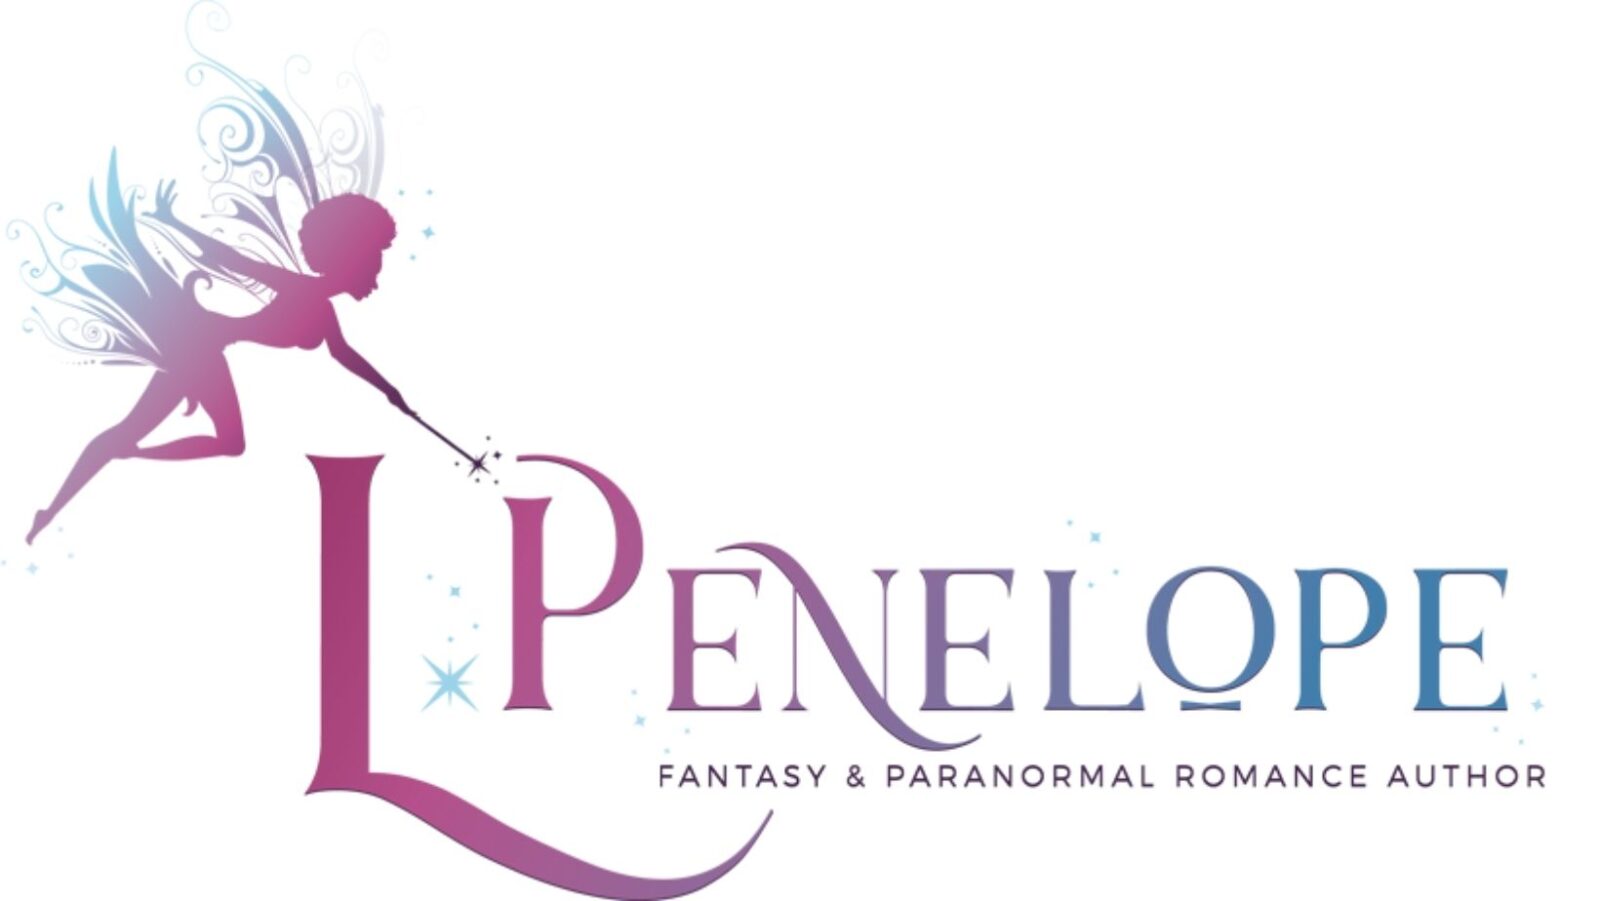 l Penelope Fantasy Romance Author